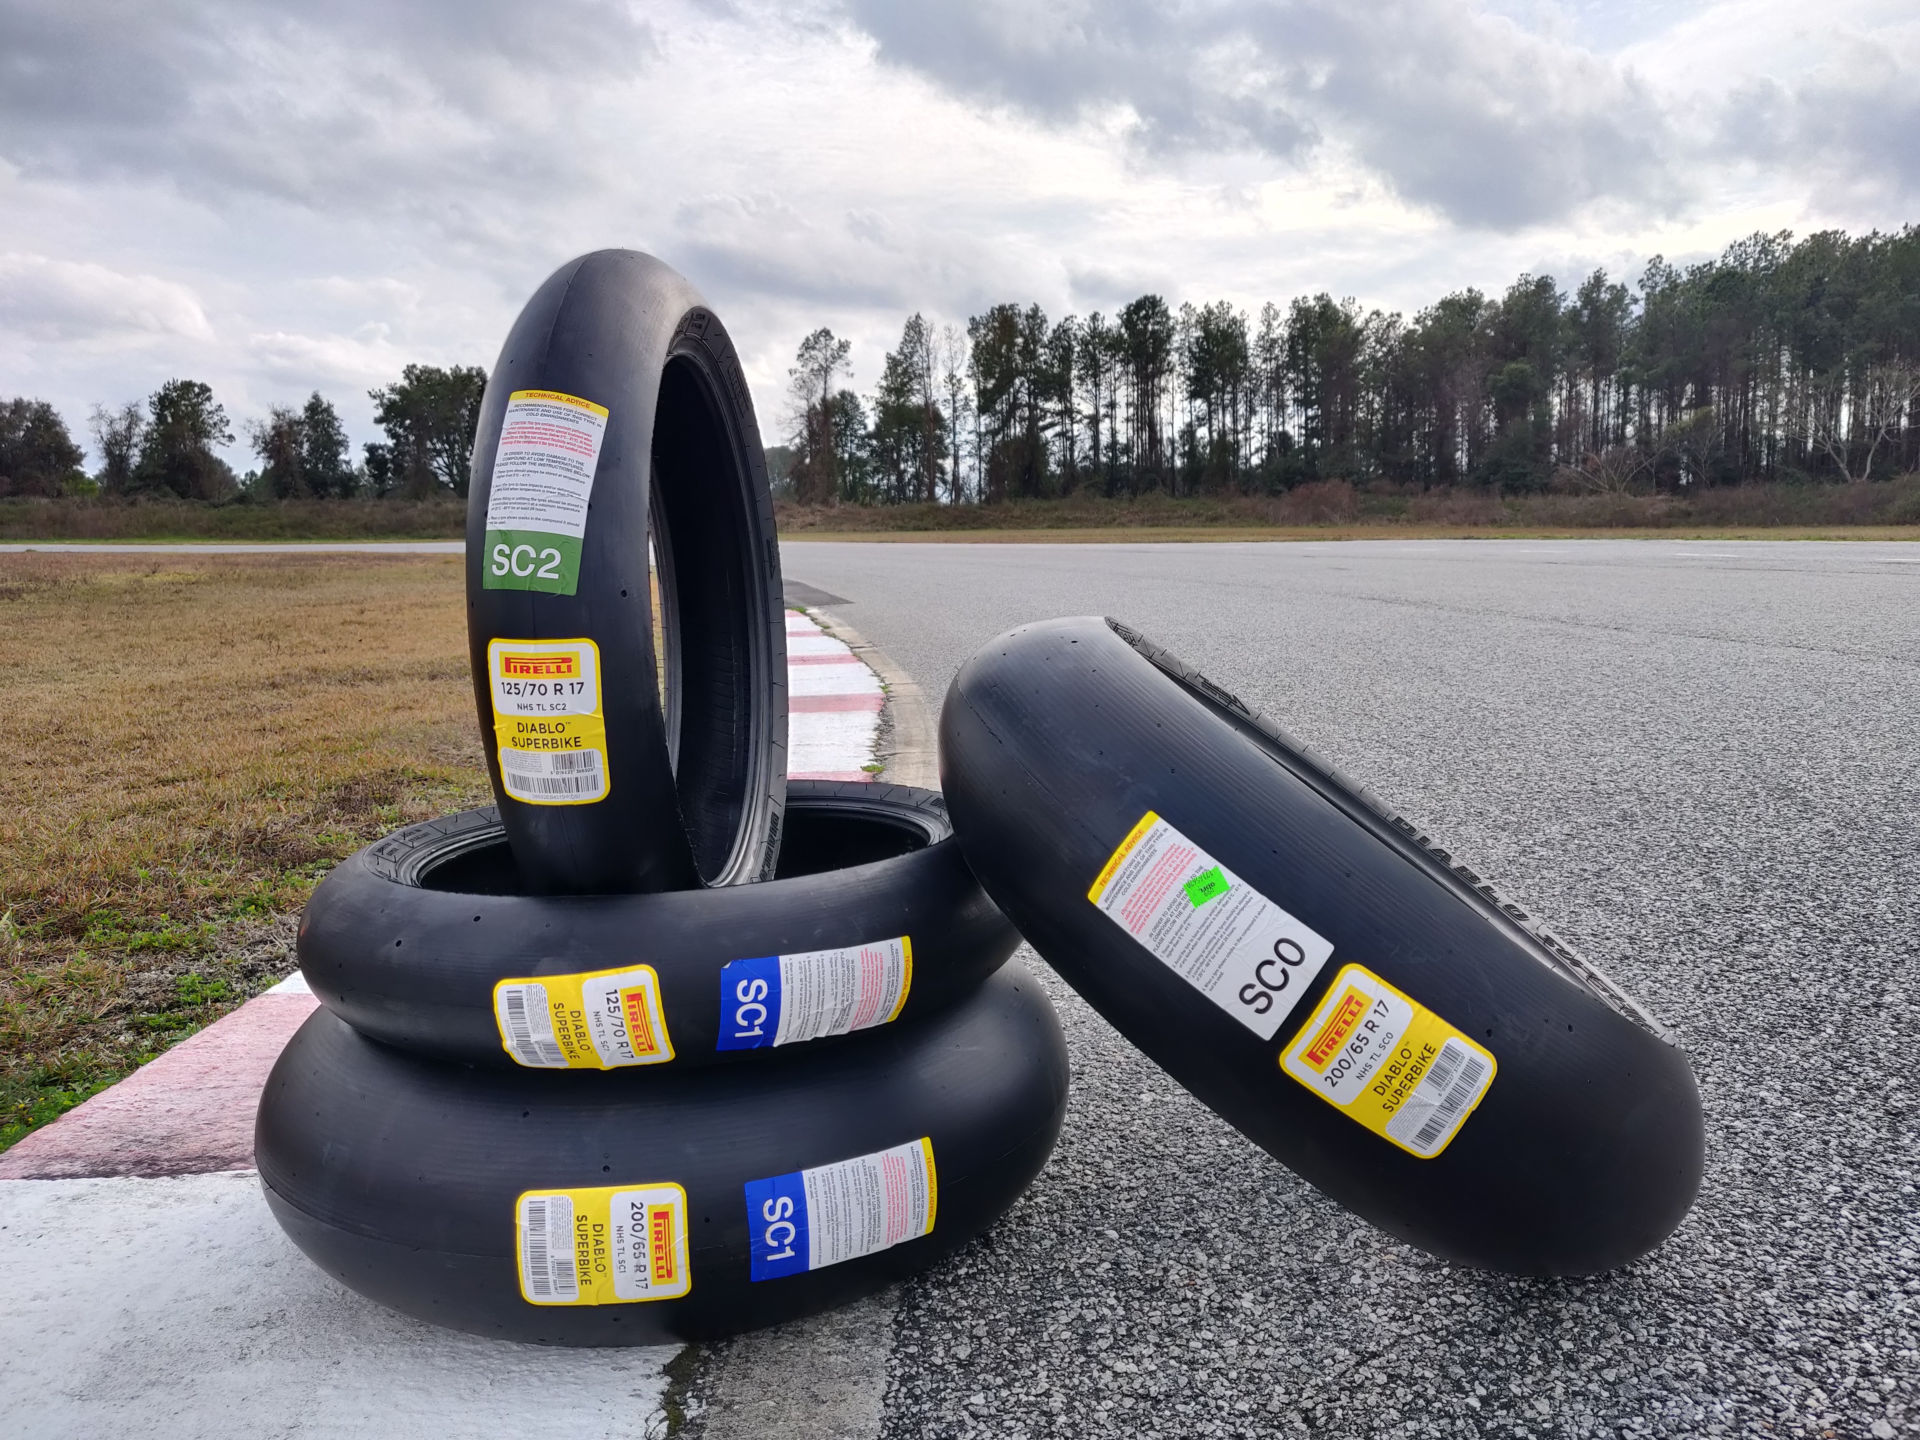 Pirelli tires. Photo courtesy Tracksidetires.